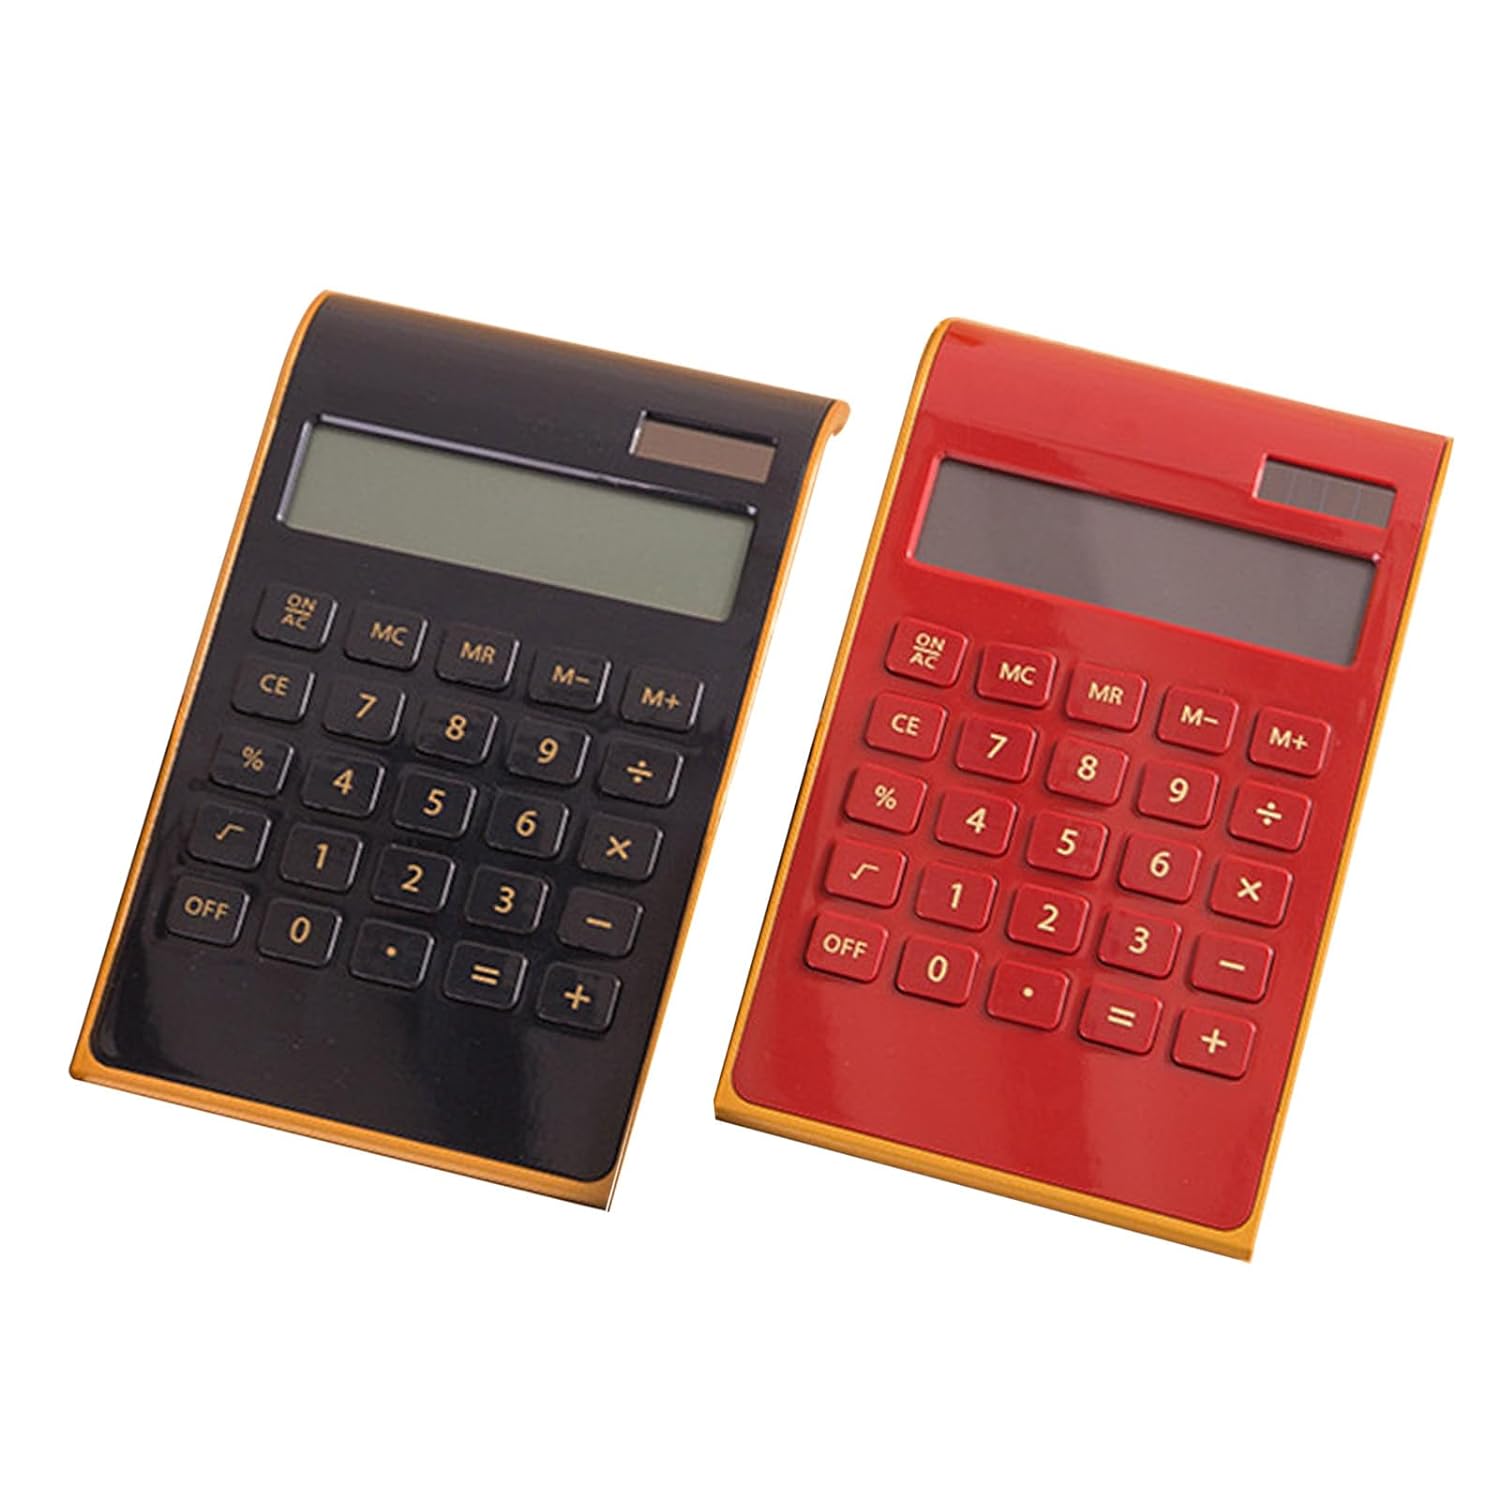 Benkaim 2-Pack Basic Large Solar Calculator Solar Red and Black Calculator Standard Function Desktop Calculator LCD 10-Digit Calculator for Office, Home